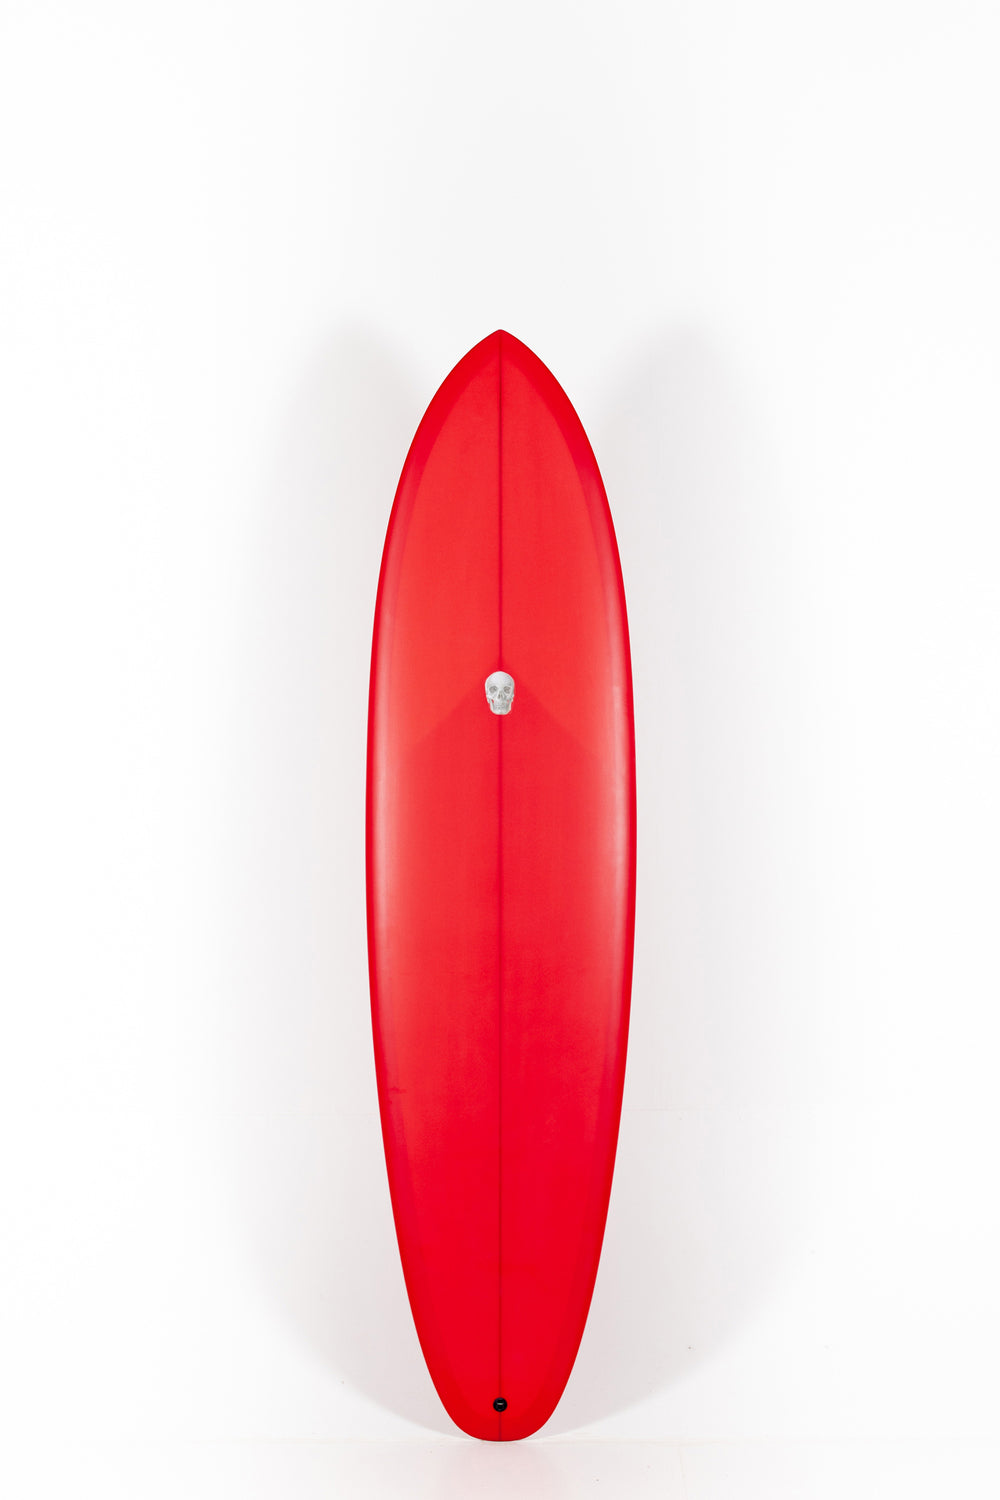 Pukas Surf shop - Christenson Surfboards - TWIN TRACKER - 7'2